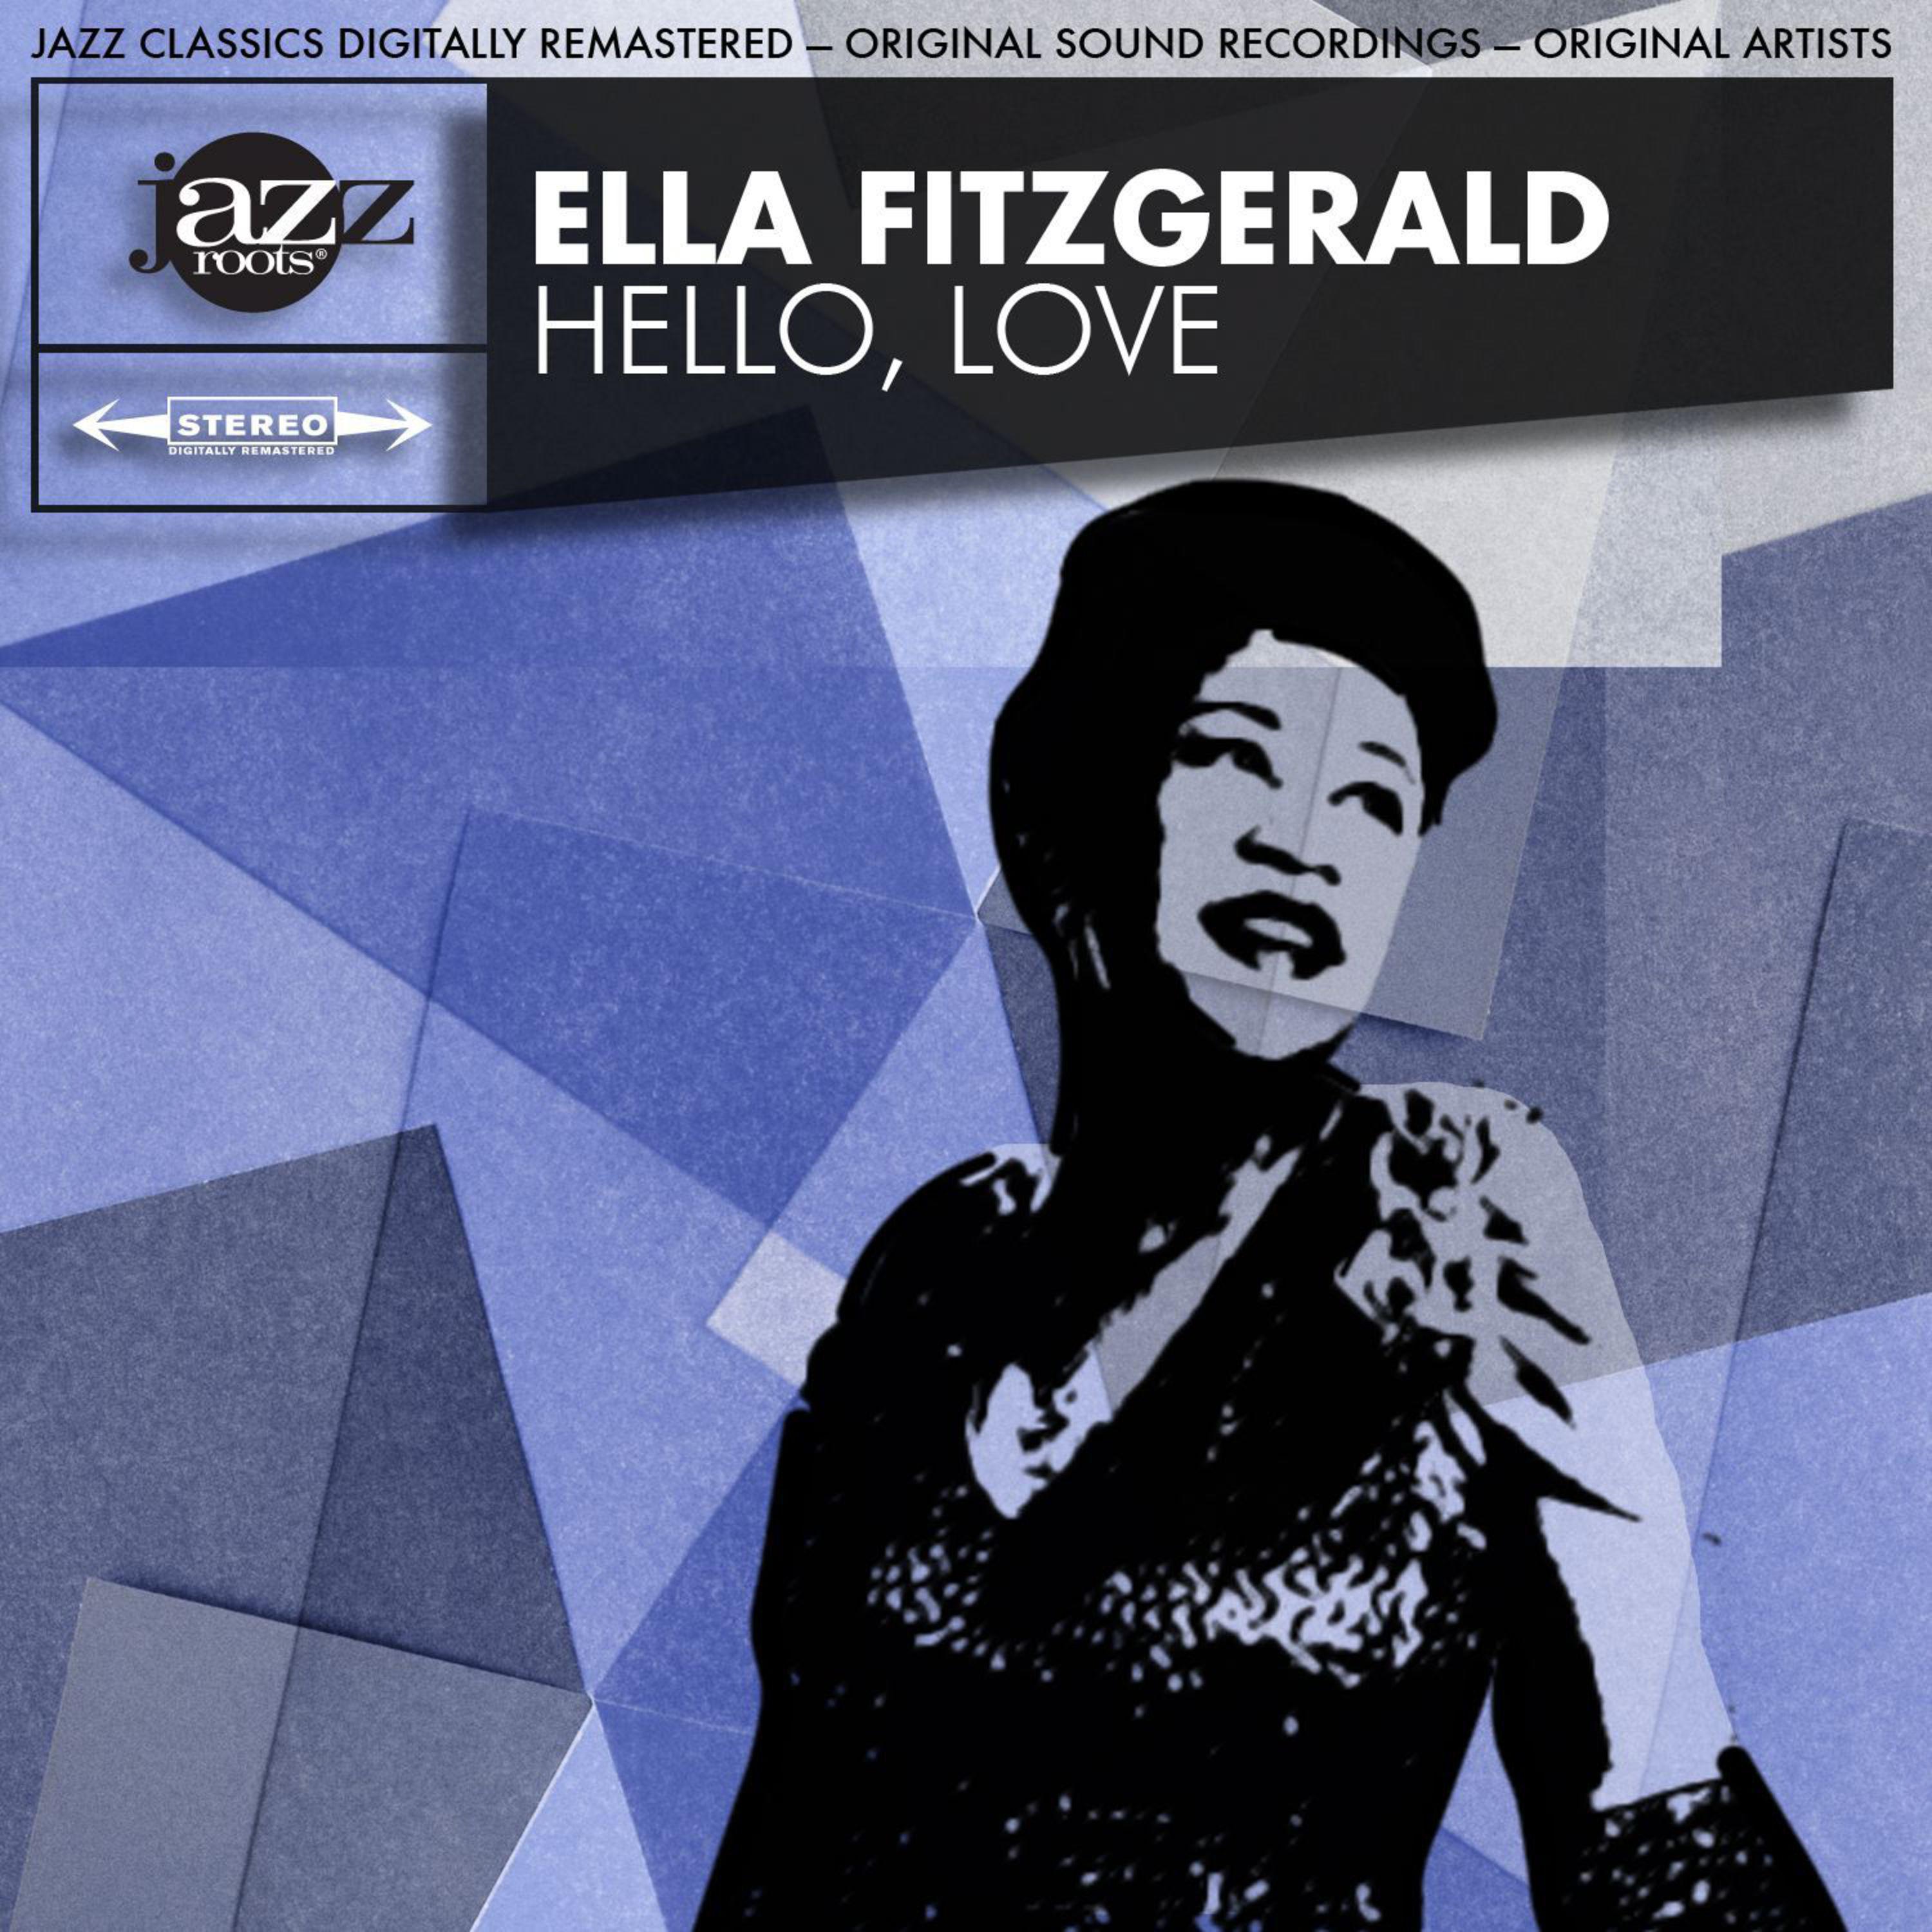 Hello, Love - Original 1960 Album - Digitally Remastered